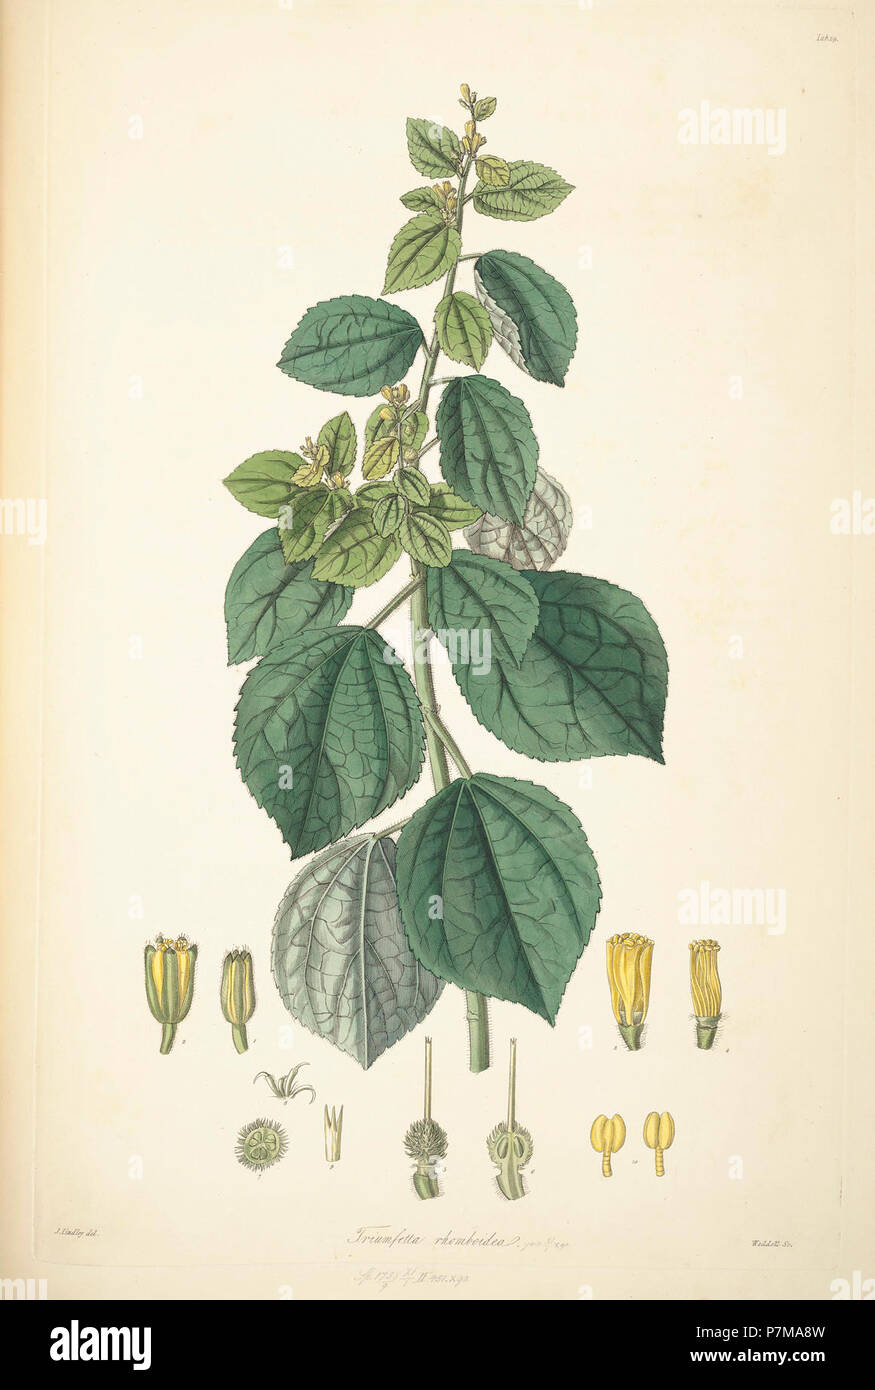 29 Triumfetta rhomboidea - John Lindley - Collectanea botanica (1821). Stock Photo